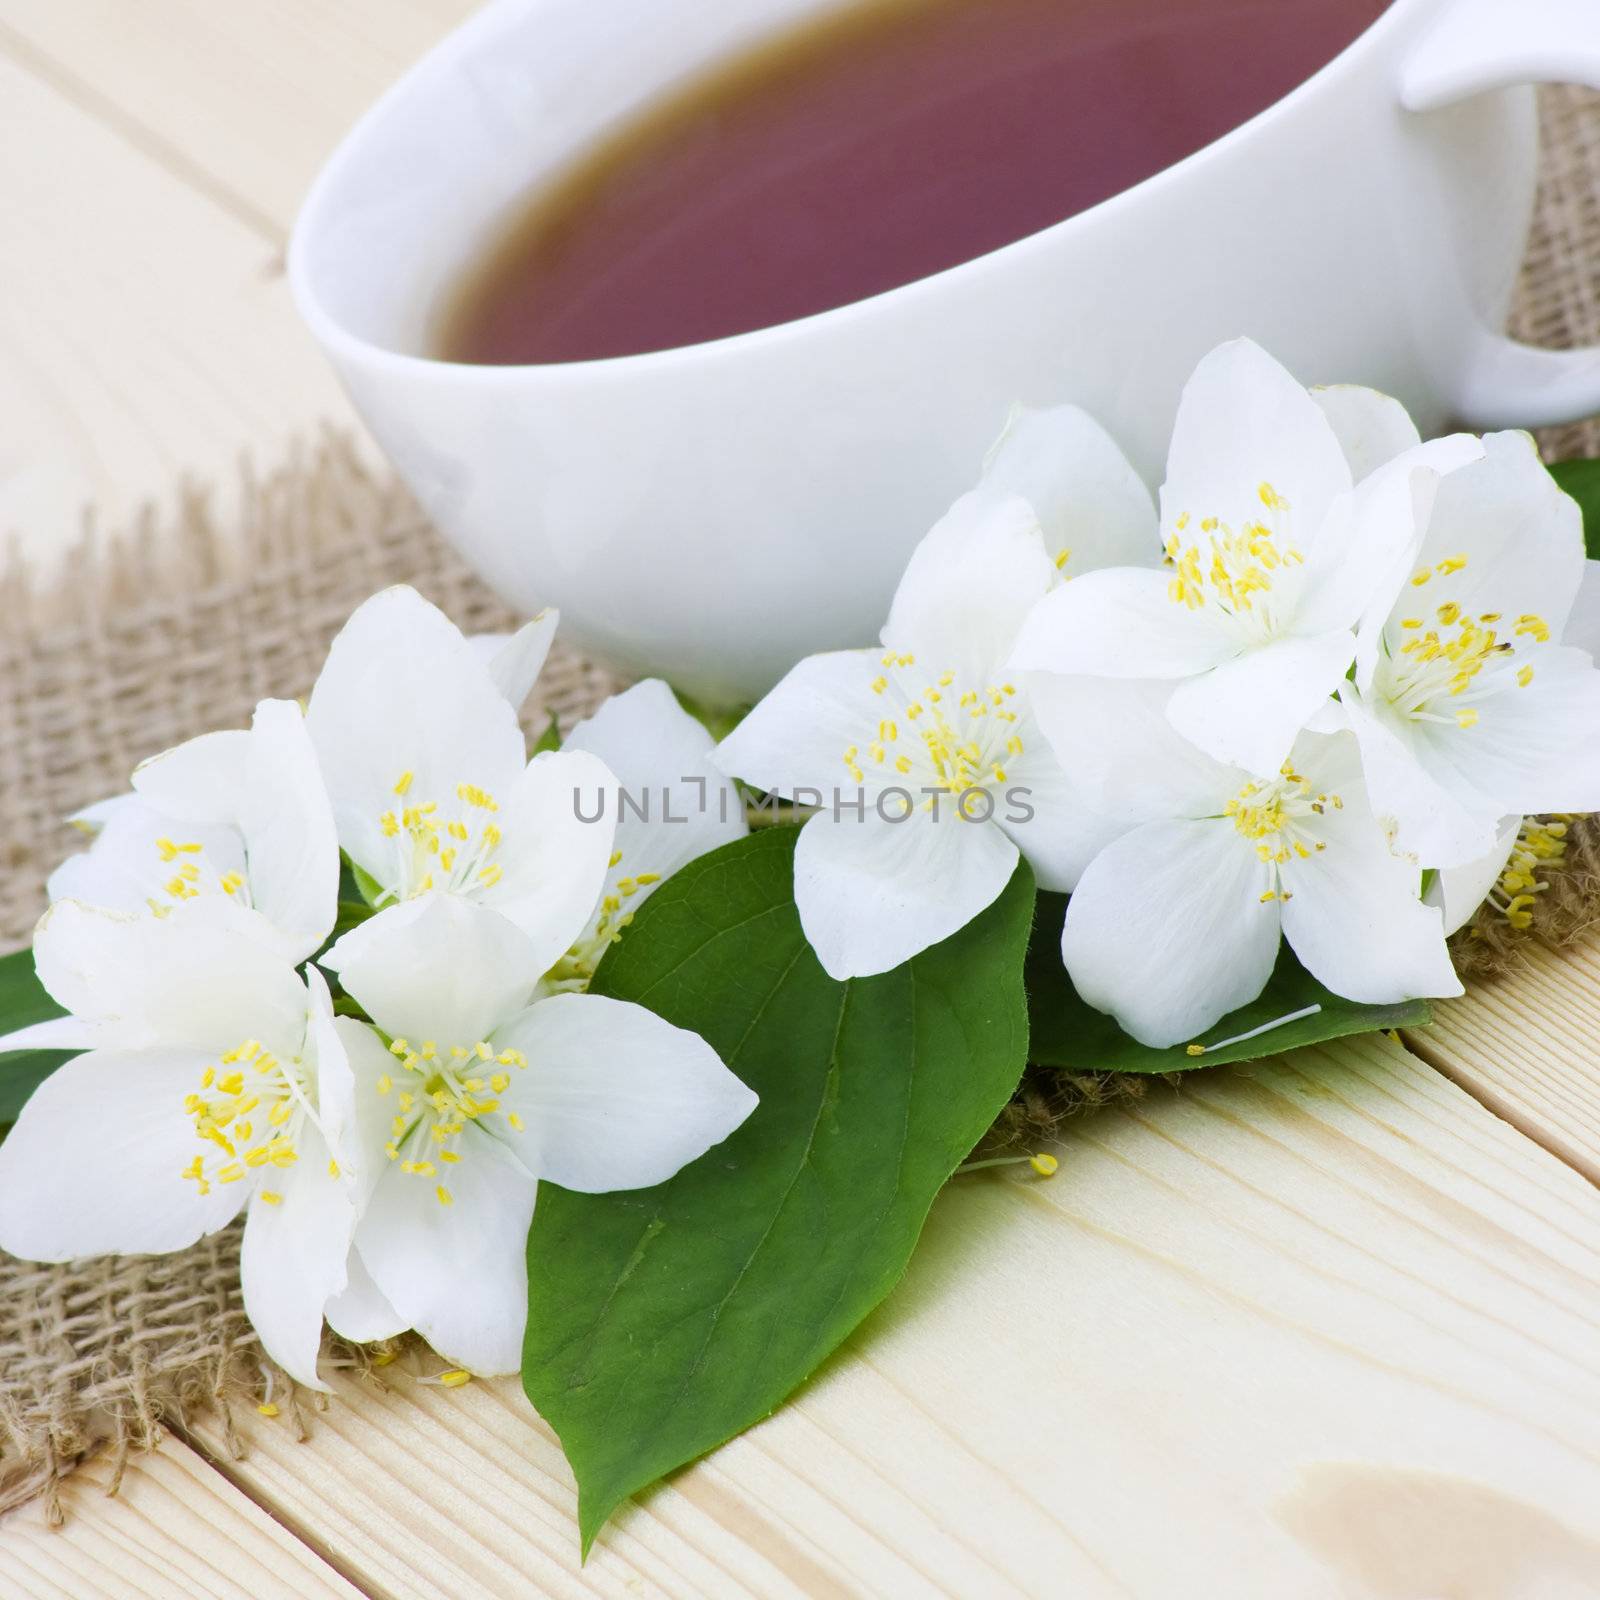 Cup of jasmine tea and jasmine flowers by miradrozdowski